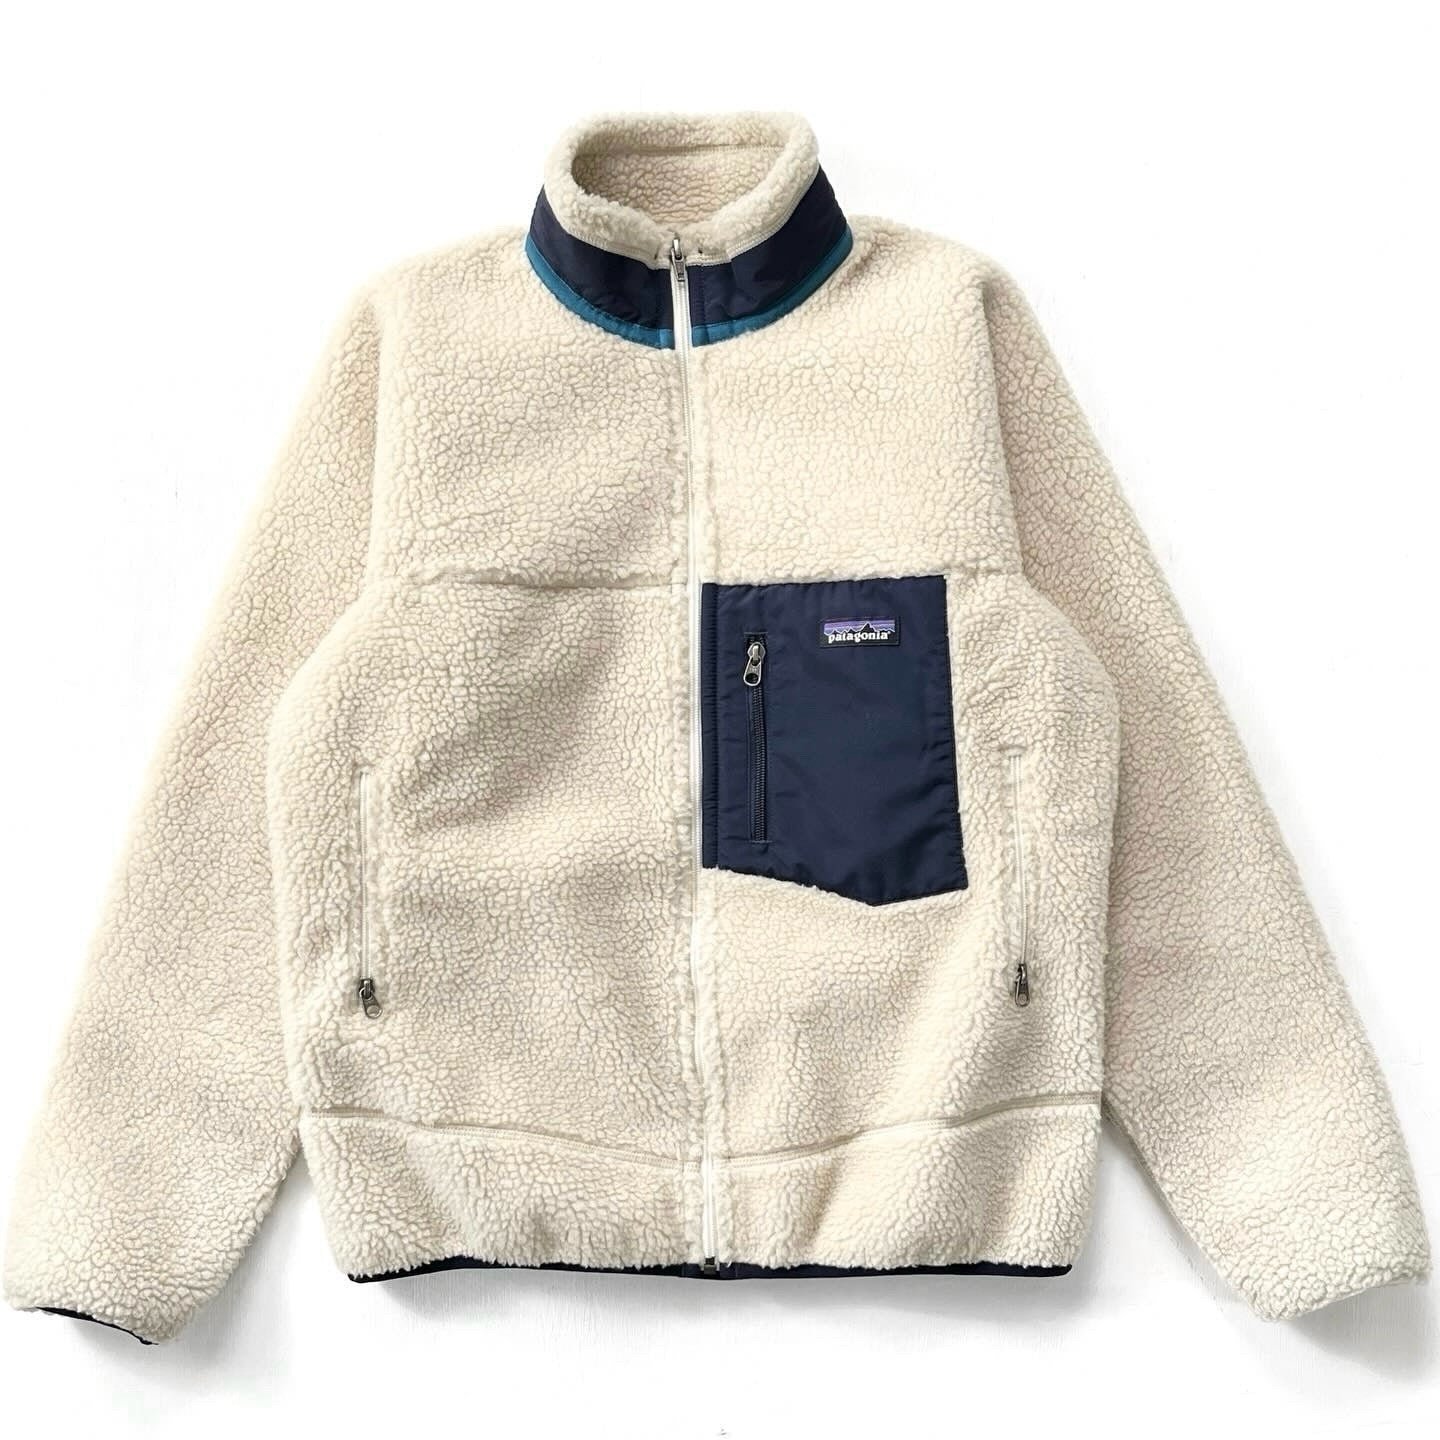 40% OFF the Patagonia Classic Retro-X Fleece Jacket 